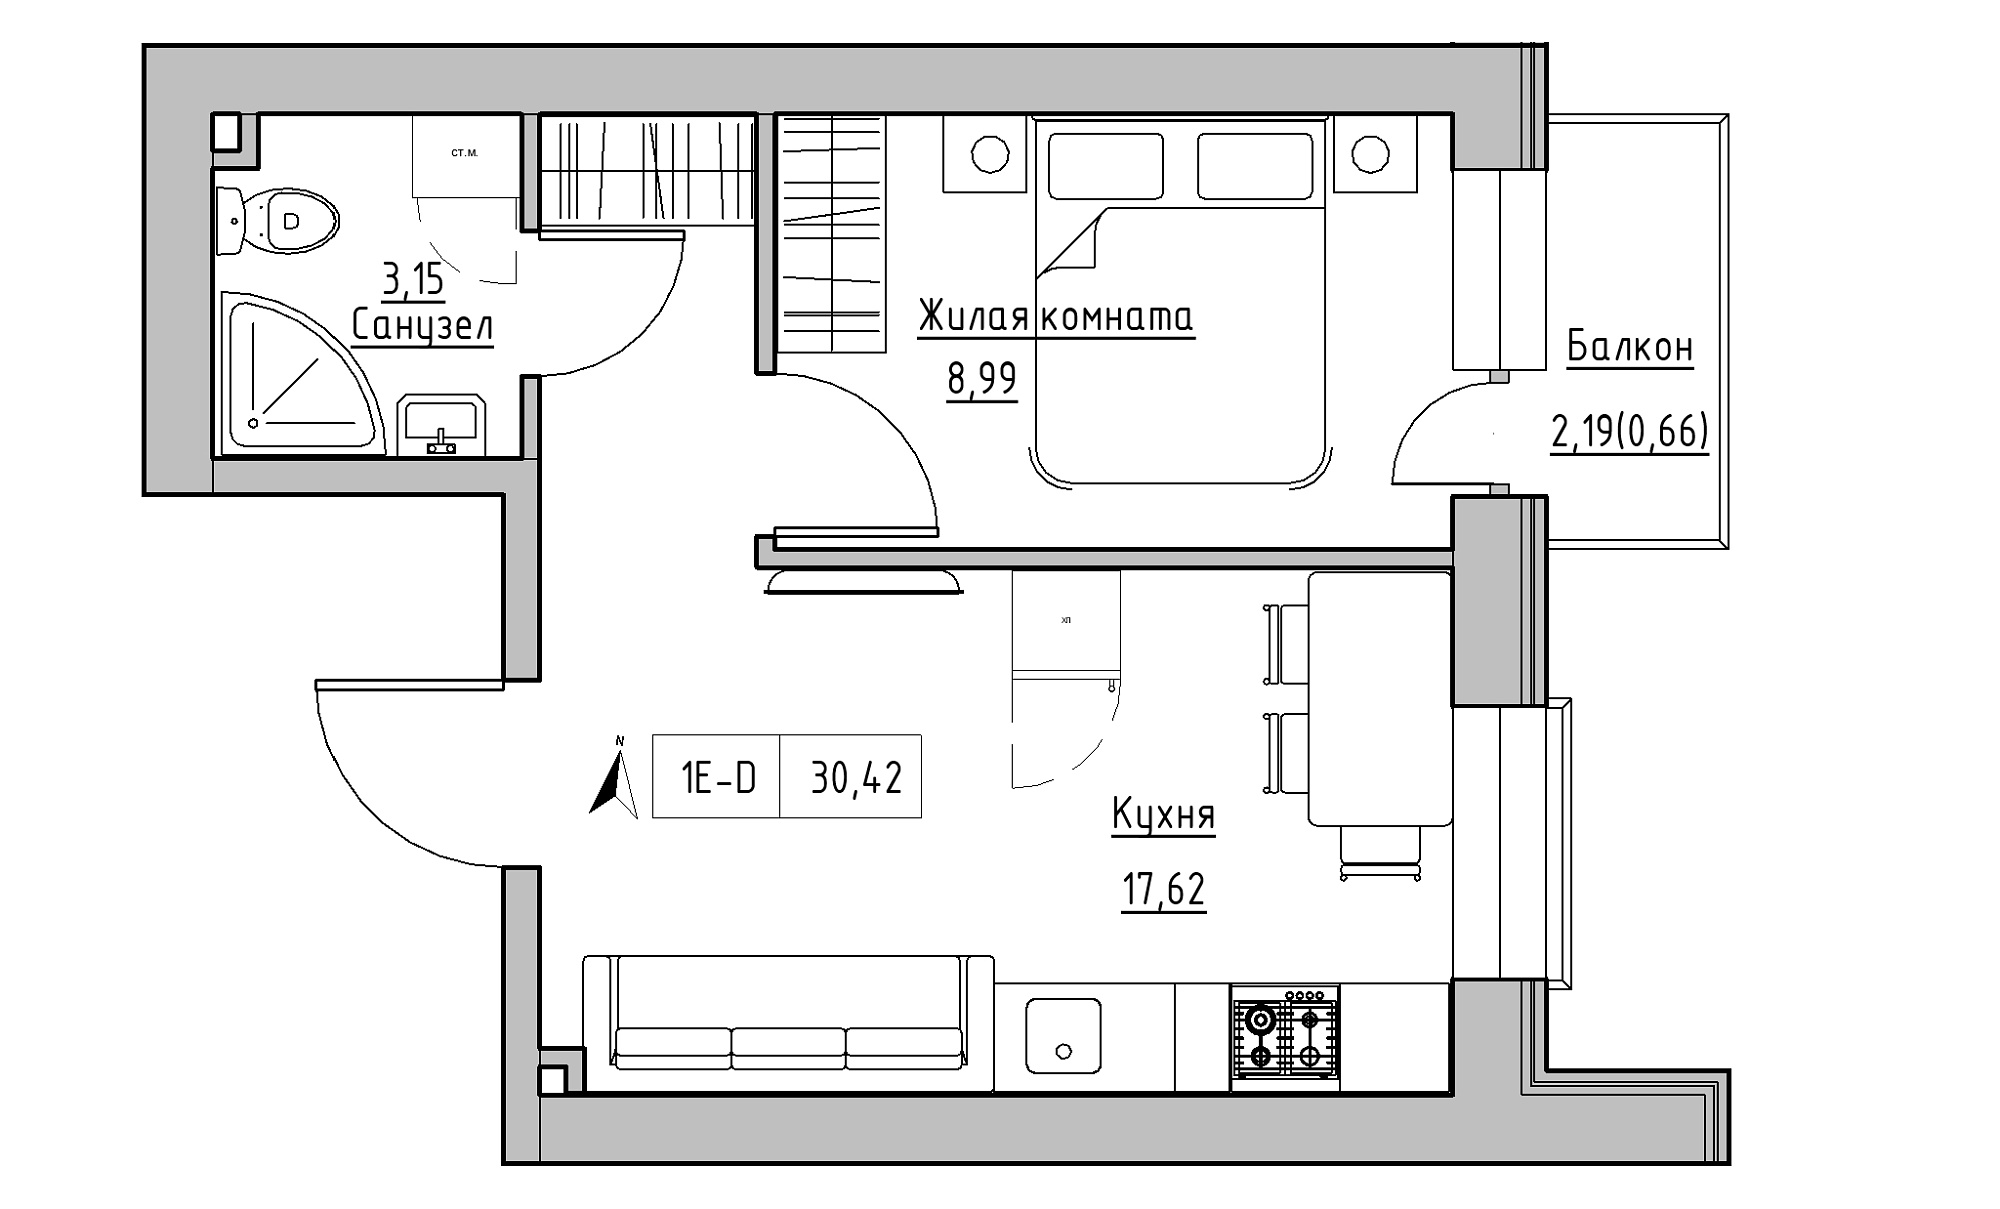 Planning 1-rm flats area 30.42m2, KS-016-03/0013.